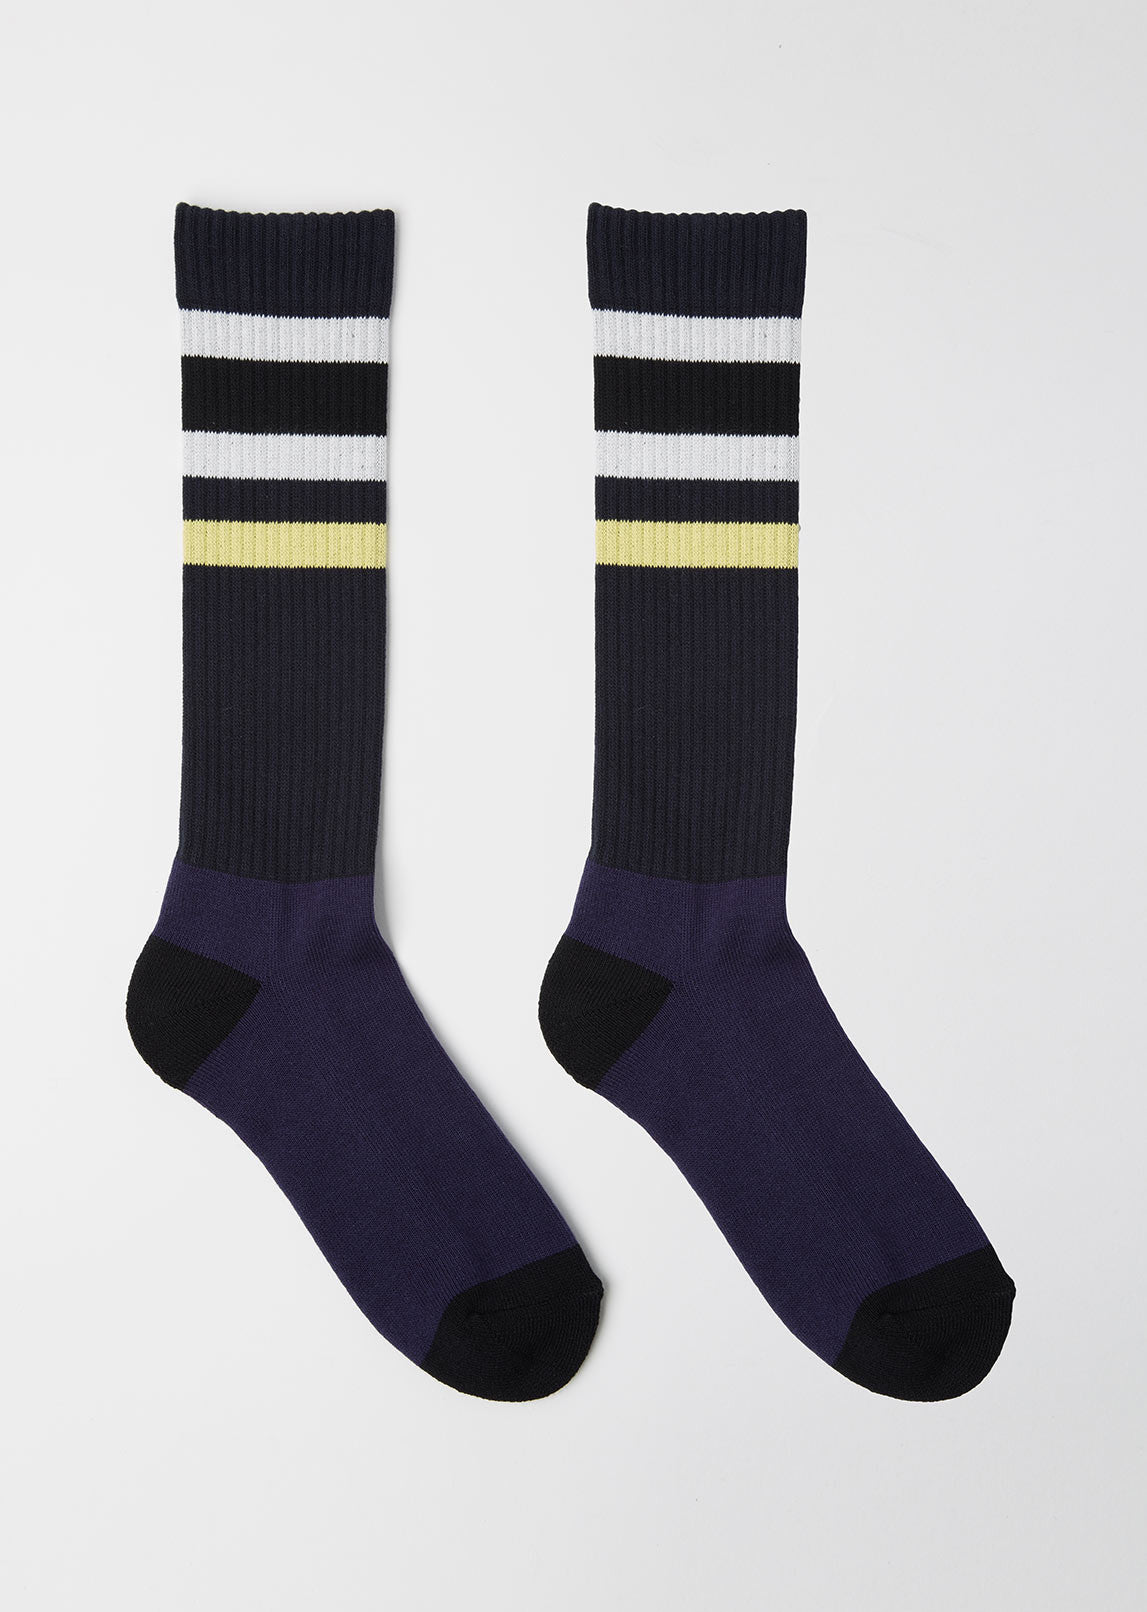 Multi-colored Socks by Sacai - La Garçonne